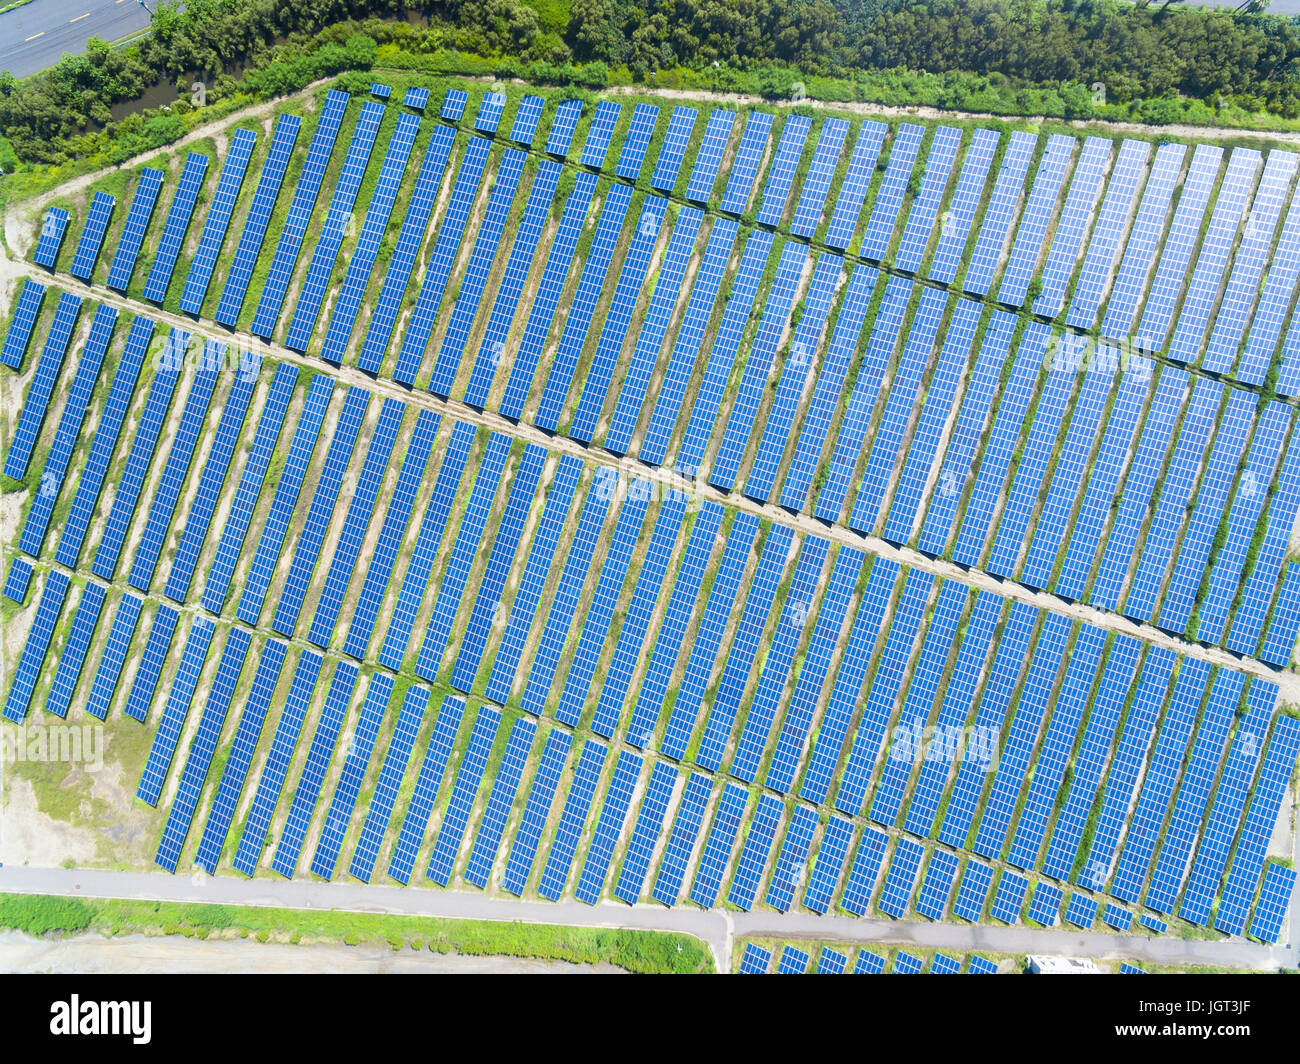 Aerial View of Solar Panel Farm Stock Photo